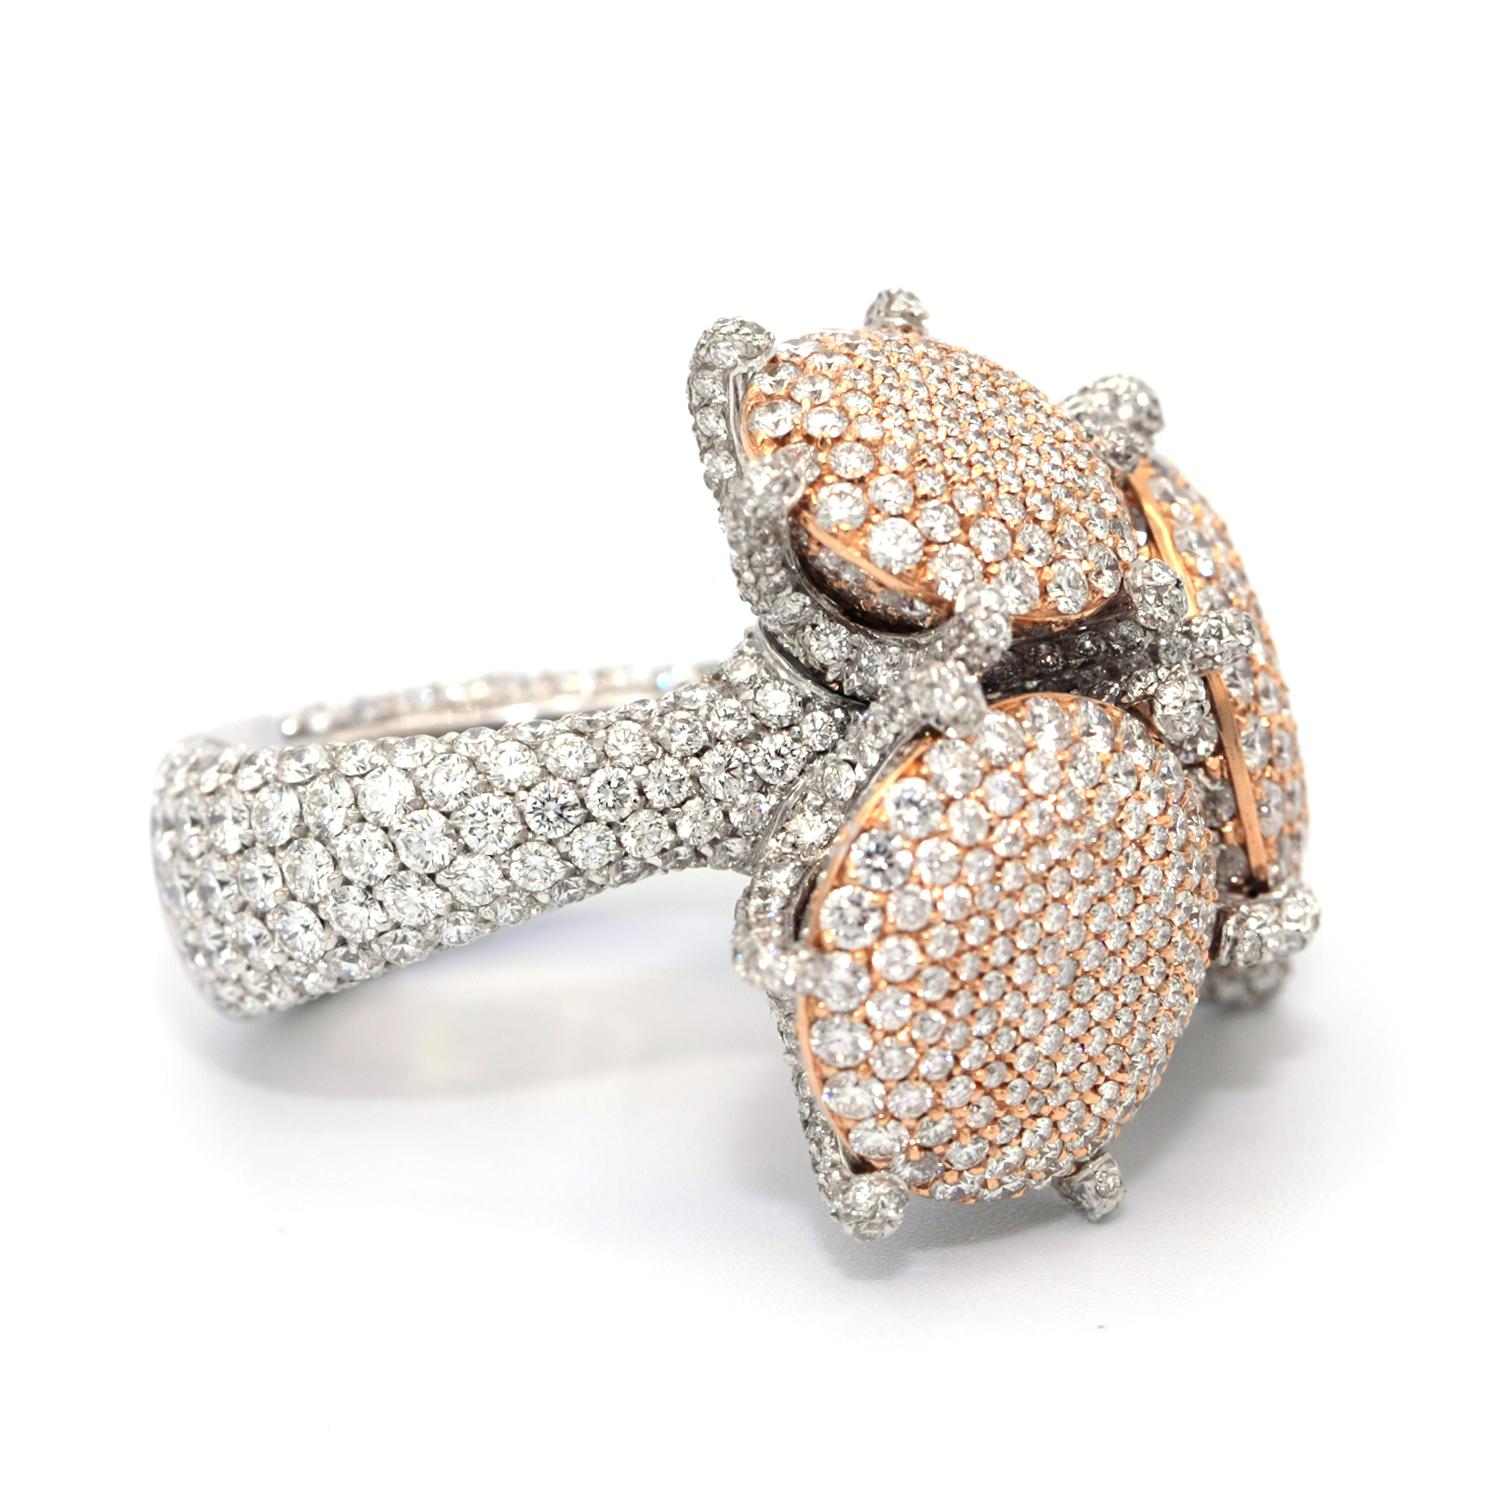 18 Karat Palmiero 15.44 Carat Diamond Ring In Excellent Condition For Sale In Los Angeles, CA